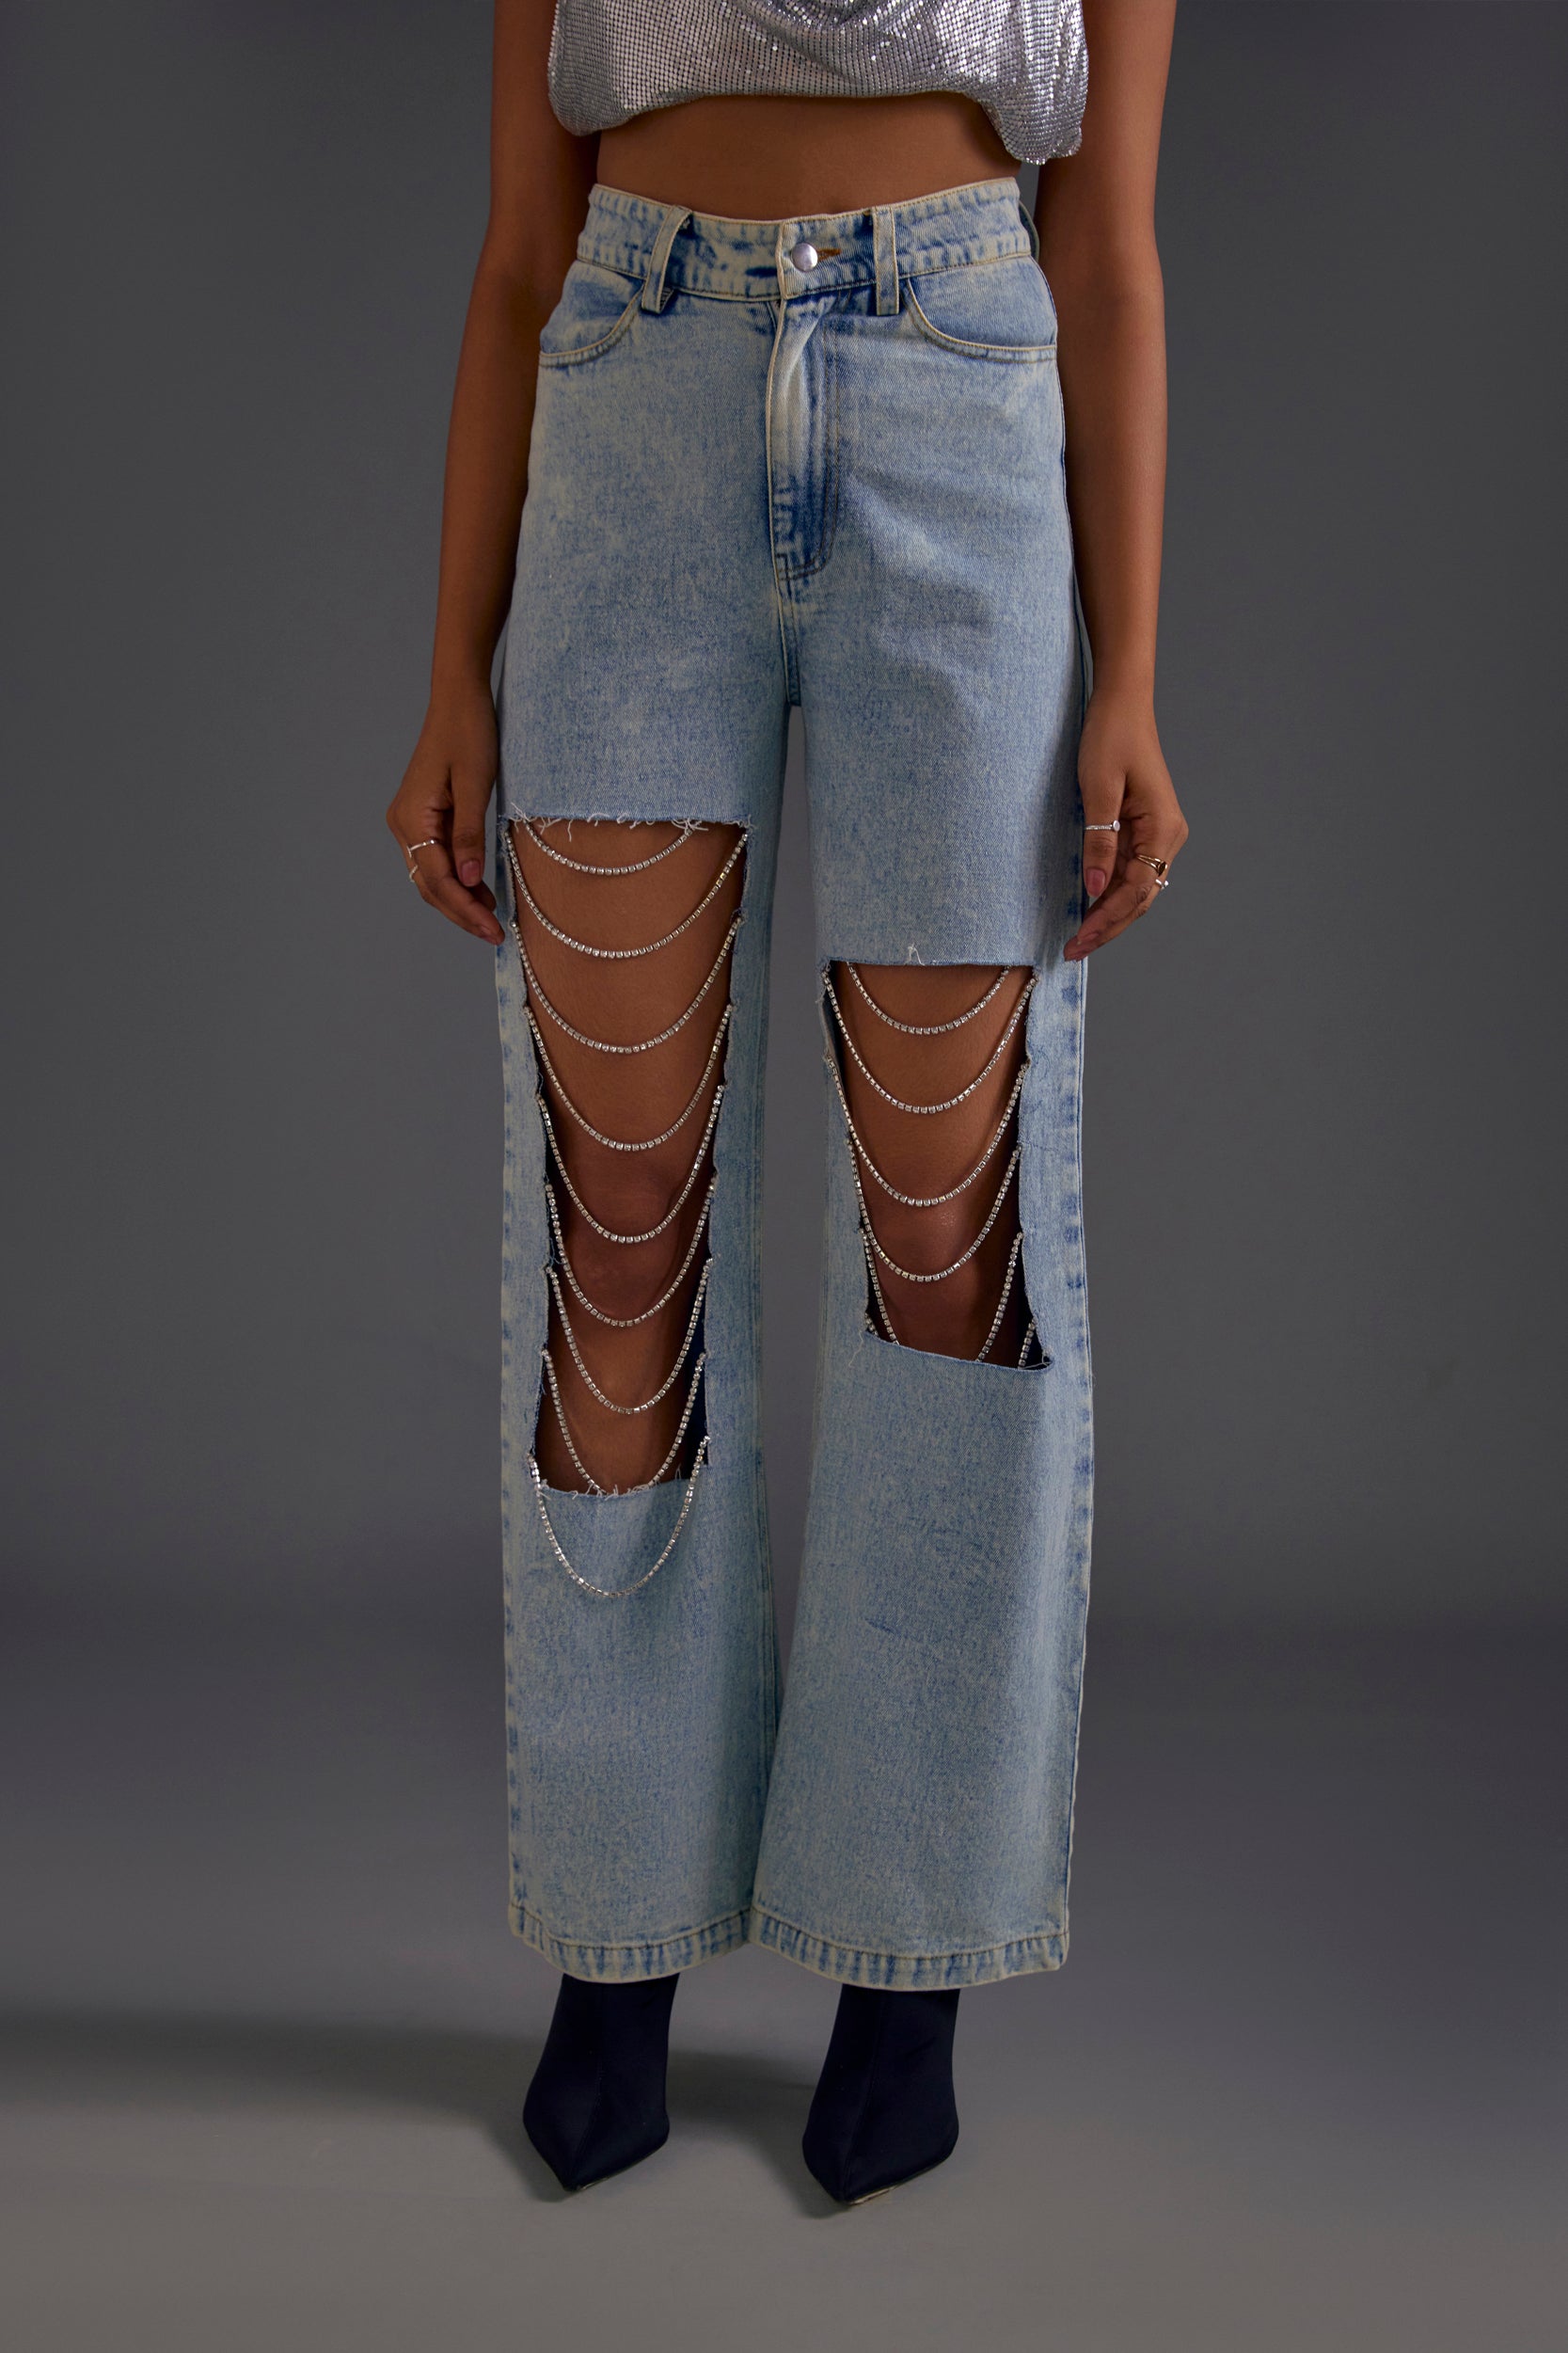 Rhinestone Embellished Ripped Jeans